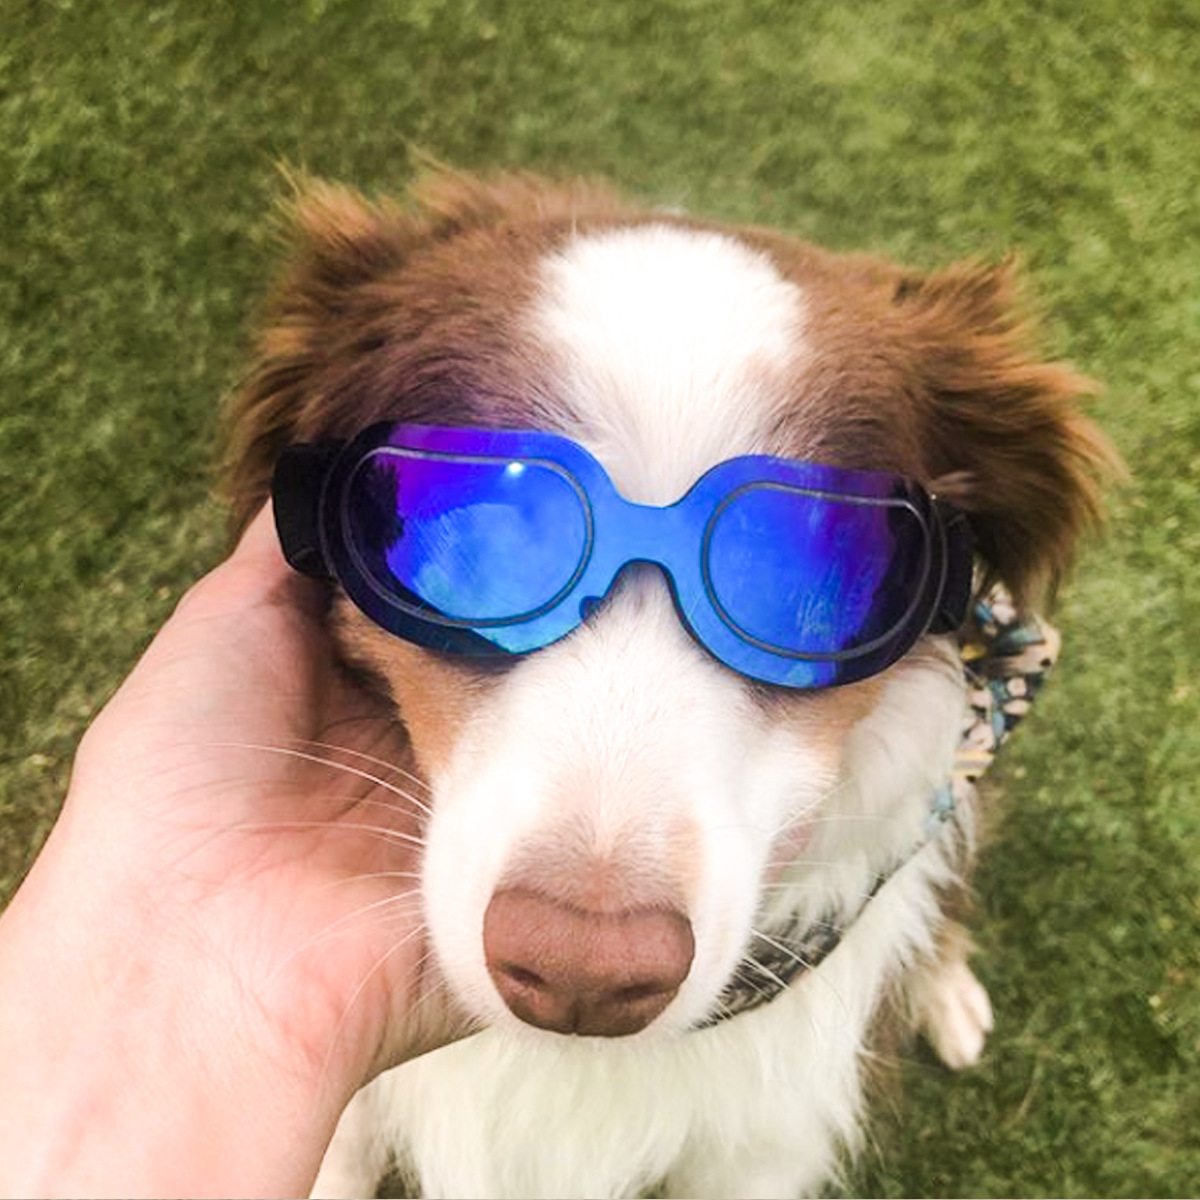 Portable Pet Dog Sunglasses UV Protection Goggles Eyewear Photo Props Cat Pet Supplies Glasses Comfortable Accessories Hot Sale